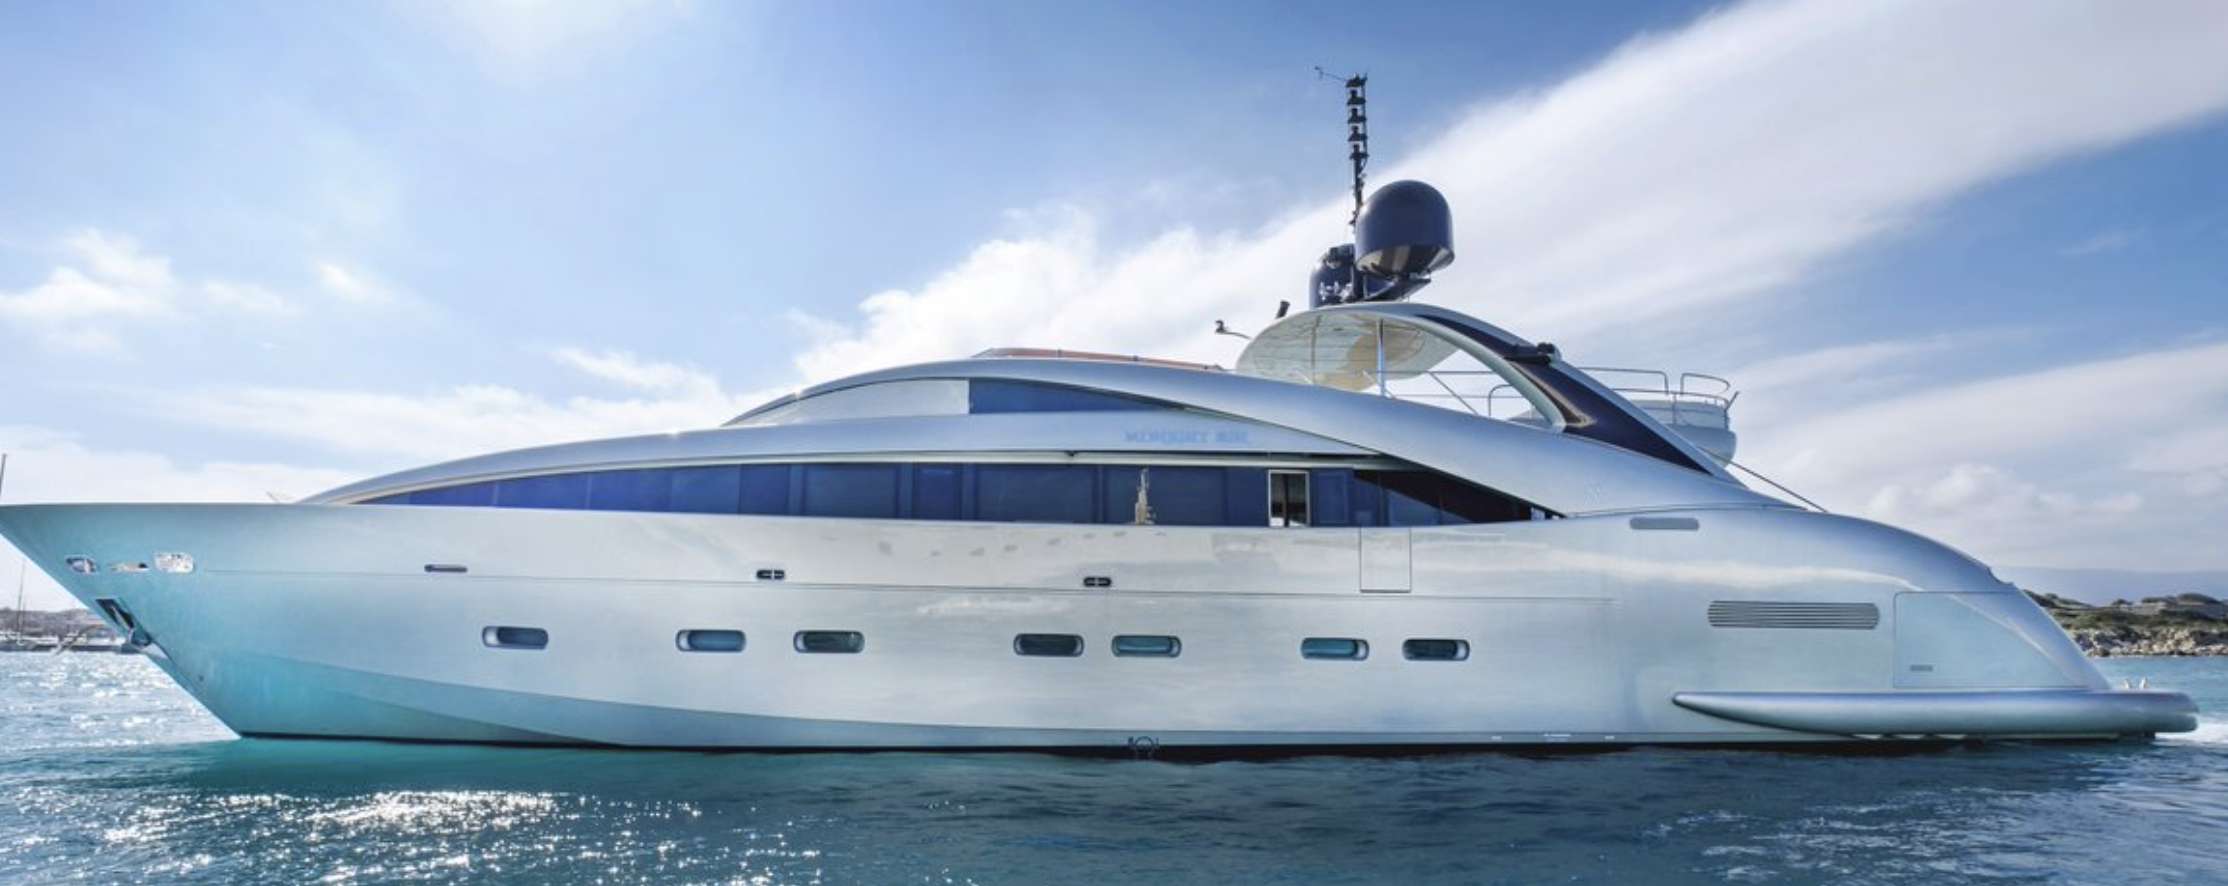 YCM 120 - Luxury yacht charter Antigua and Barbuda & Boat hire in Riviera, Corsica, Sardinia, Spain, Balearics, Caribbean 4